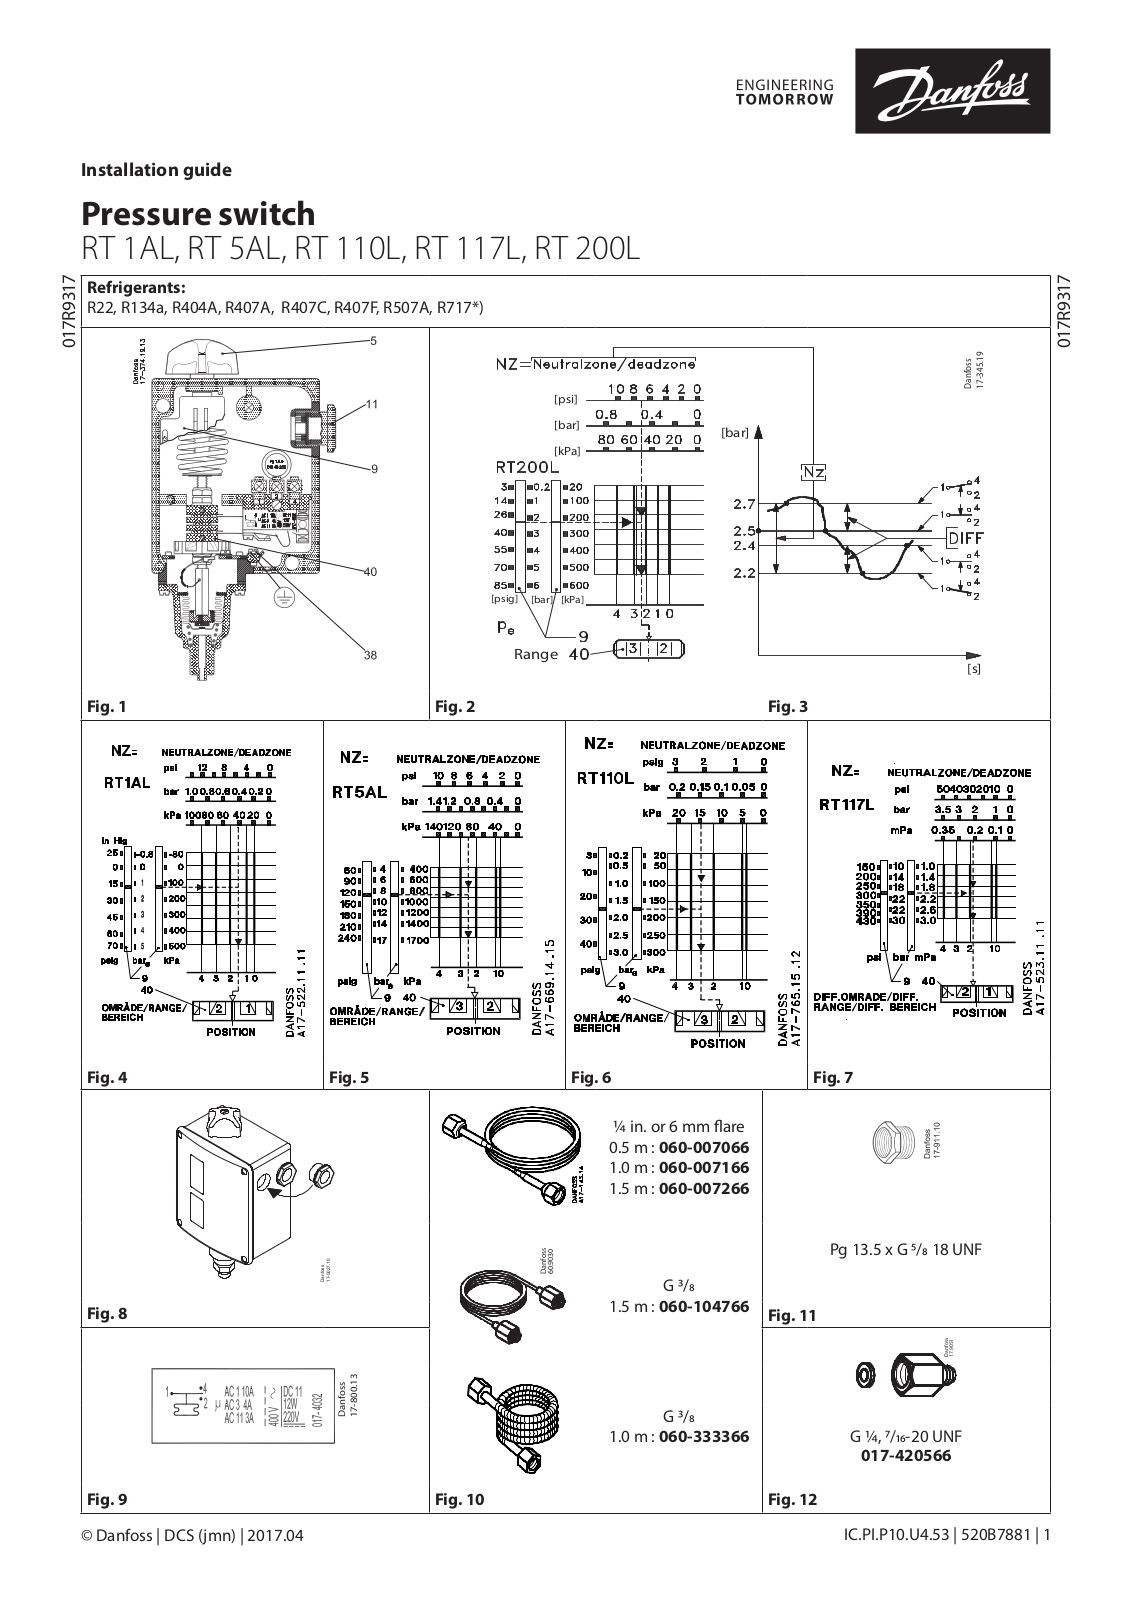 Danfoss RT 1AL, RT 5AL, RT 110L, RT 117L, RT 200 Installation guide